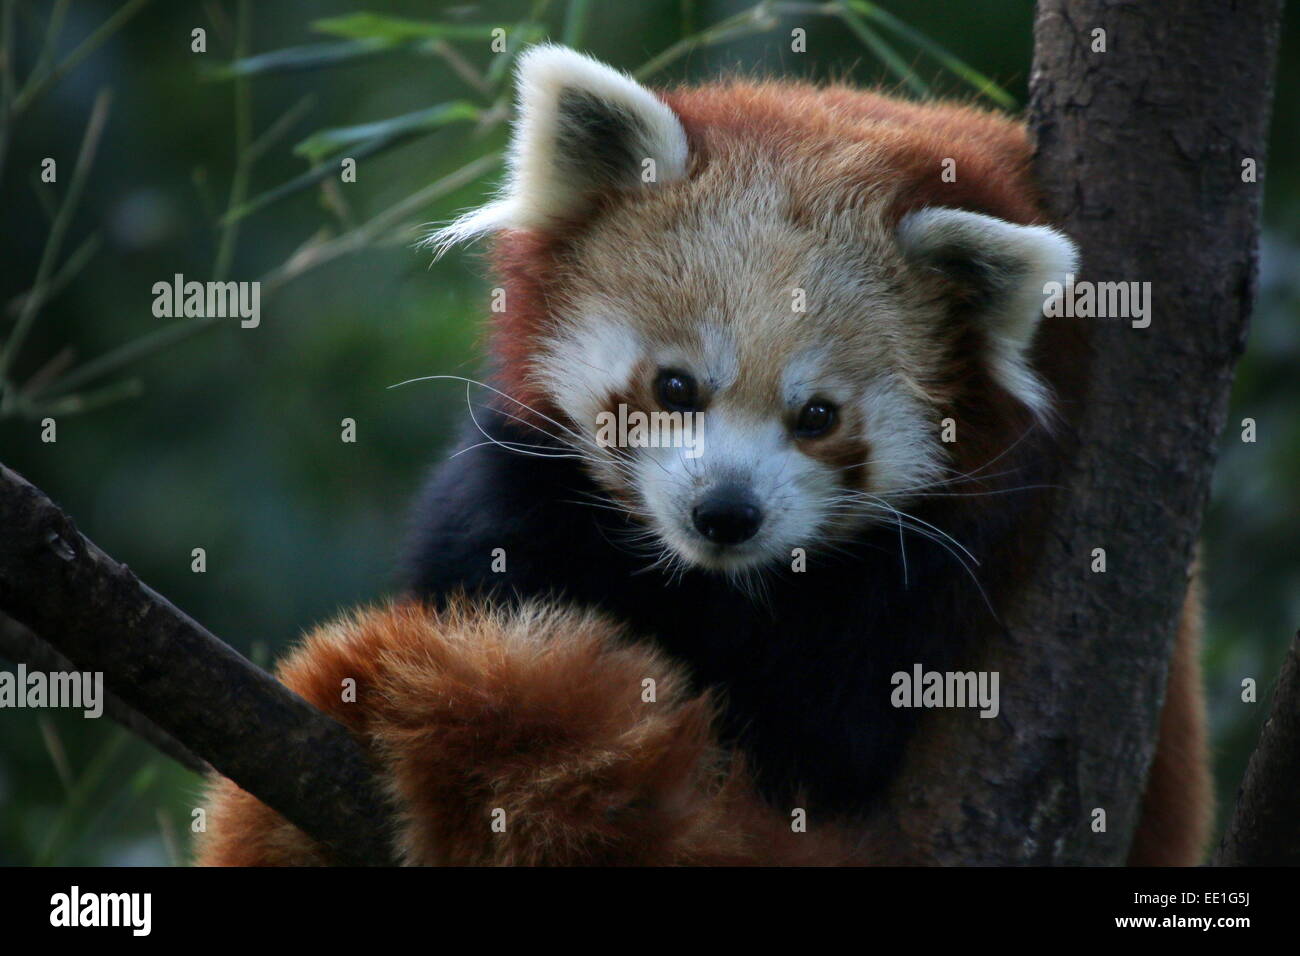 Alert Asian Red Panda (Ailurus fulgens) in a tree, facing camera Stock Photo